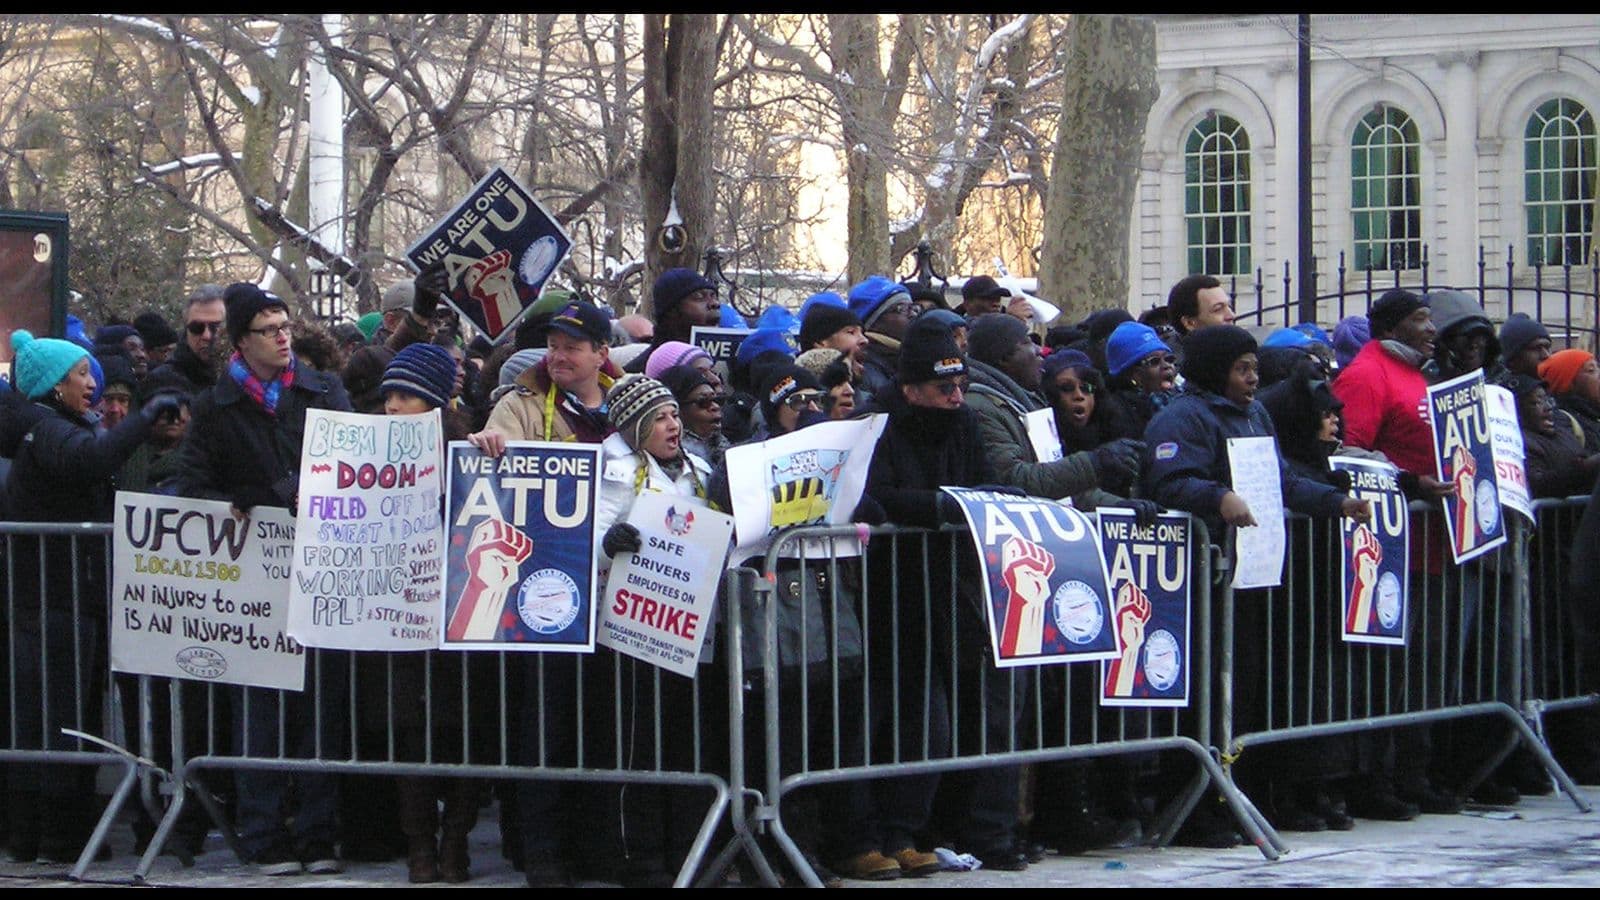 Bus strikers demonstration in New York City